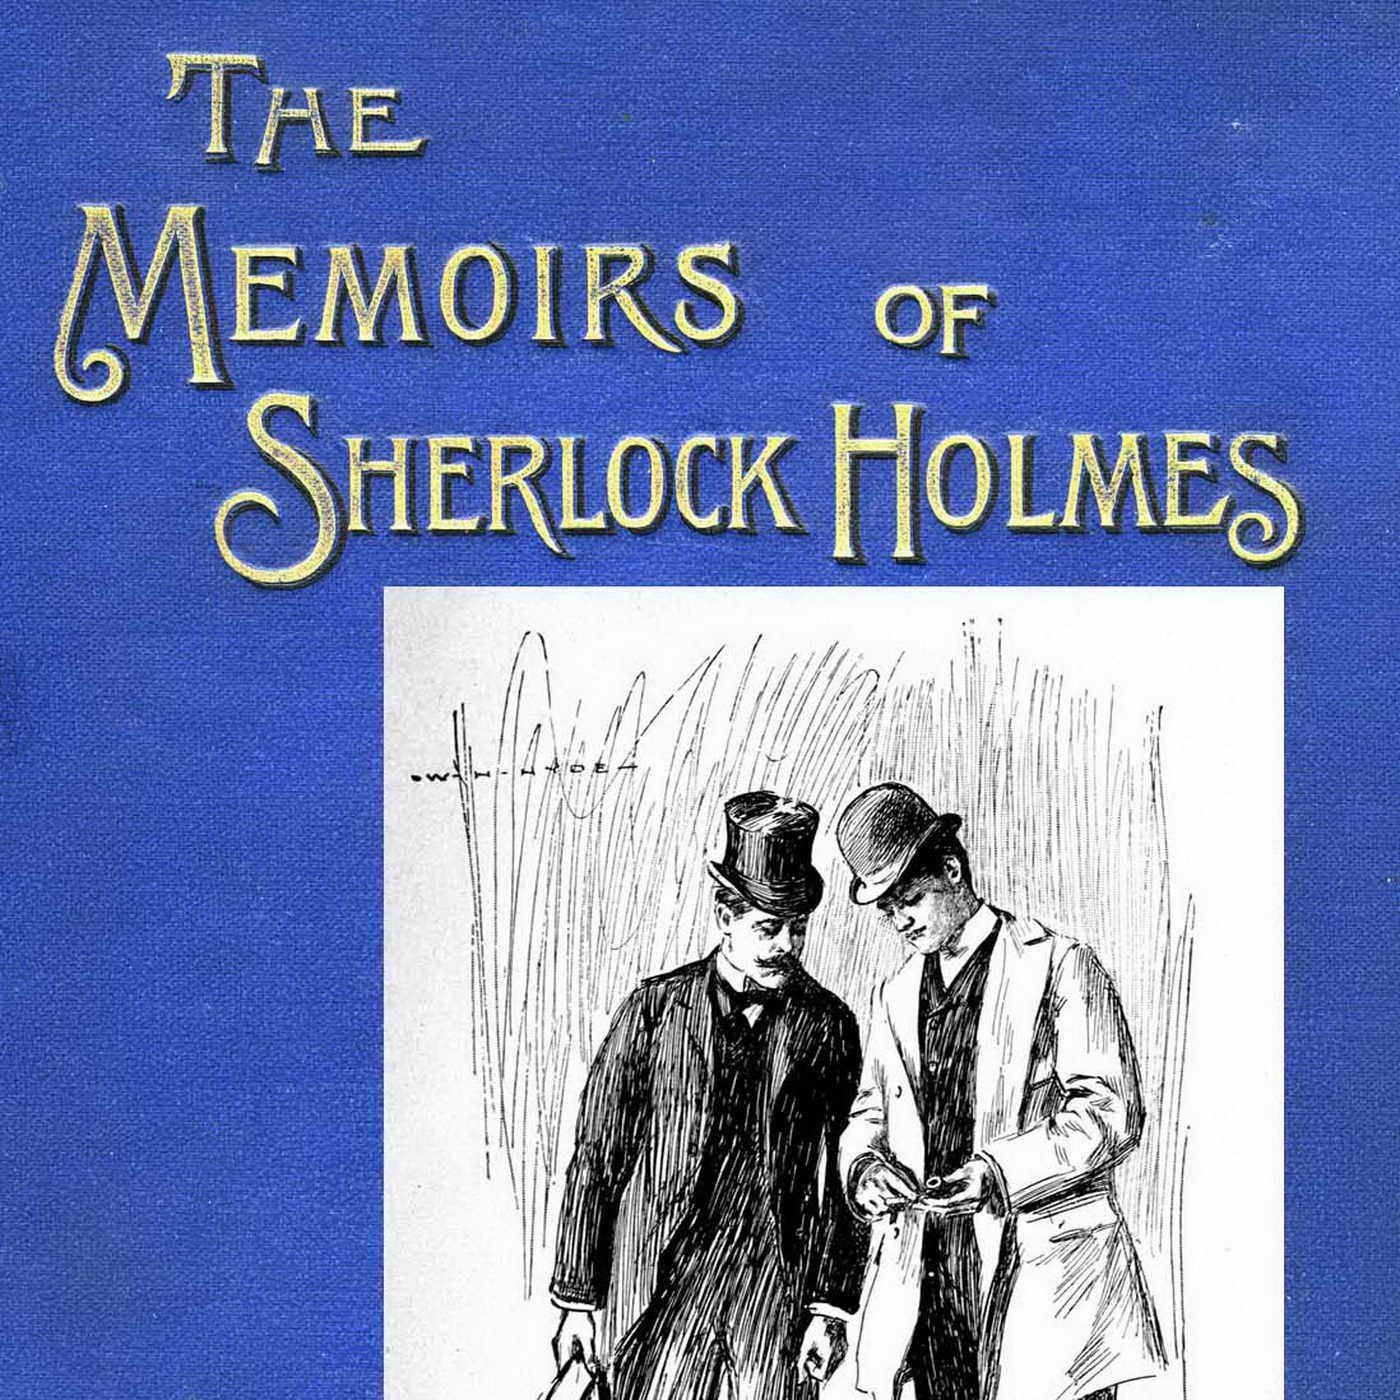 The Memoris of Sherlock Holmes by Sir Arthus Conan Doyle Audiobook Podcast on Hubhopper